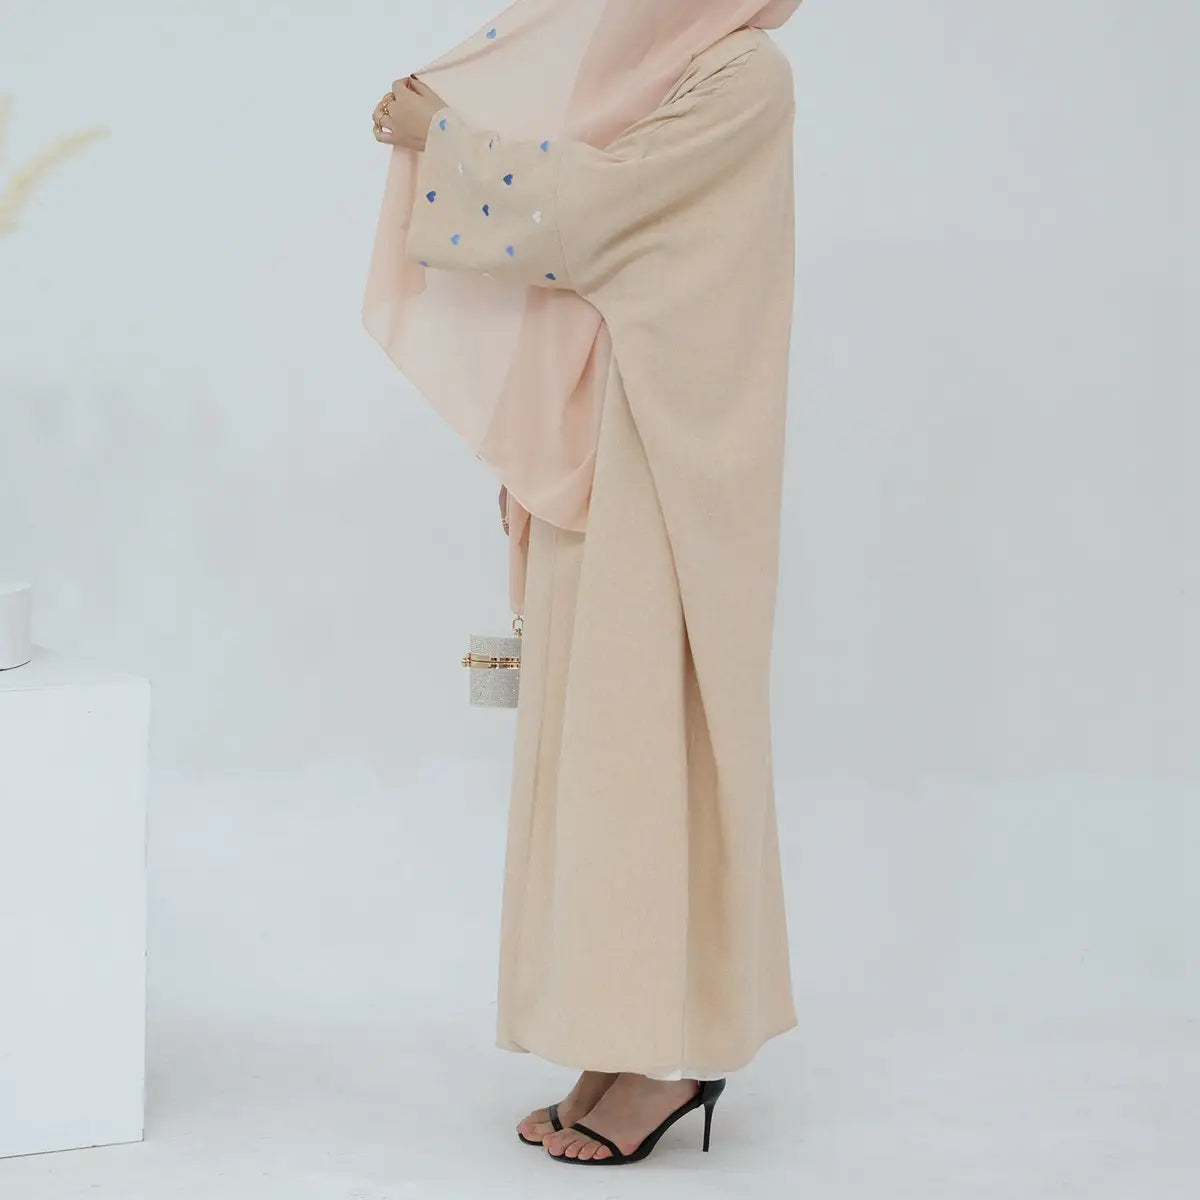 Heart Embroidery Cotton Linen Cardigan Open Abaya Dress